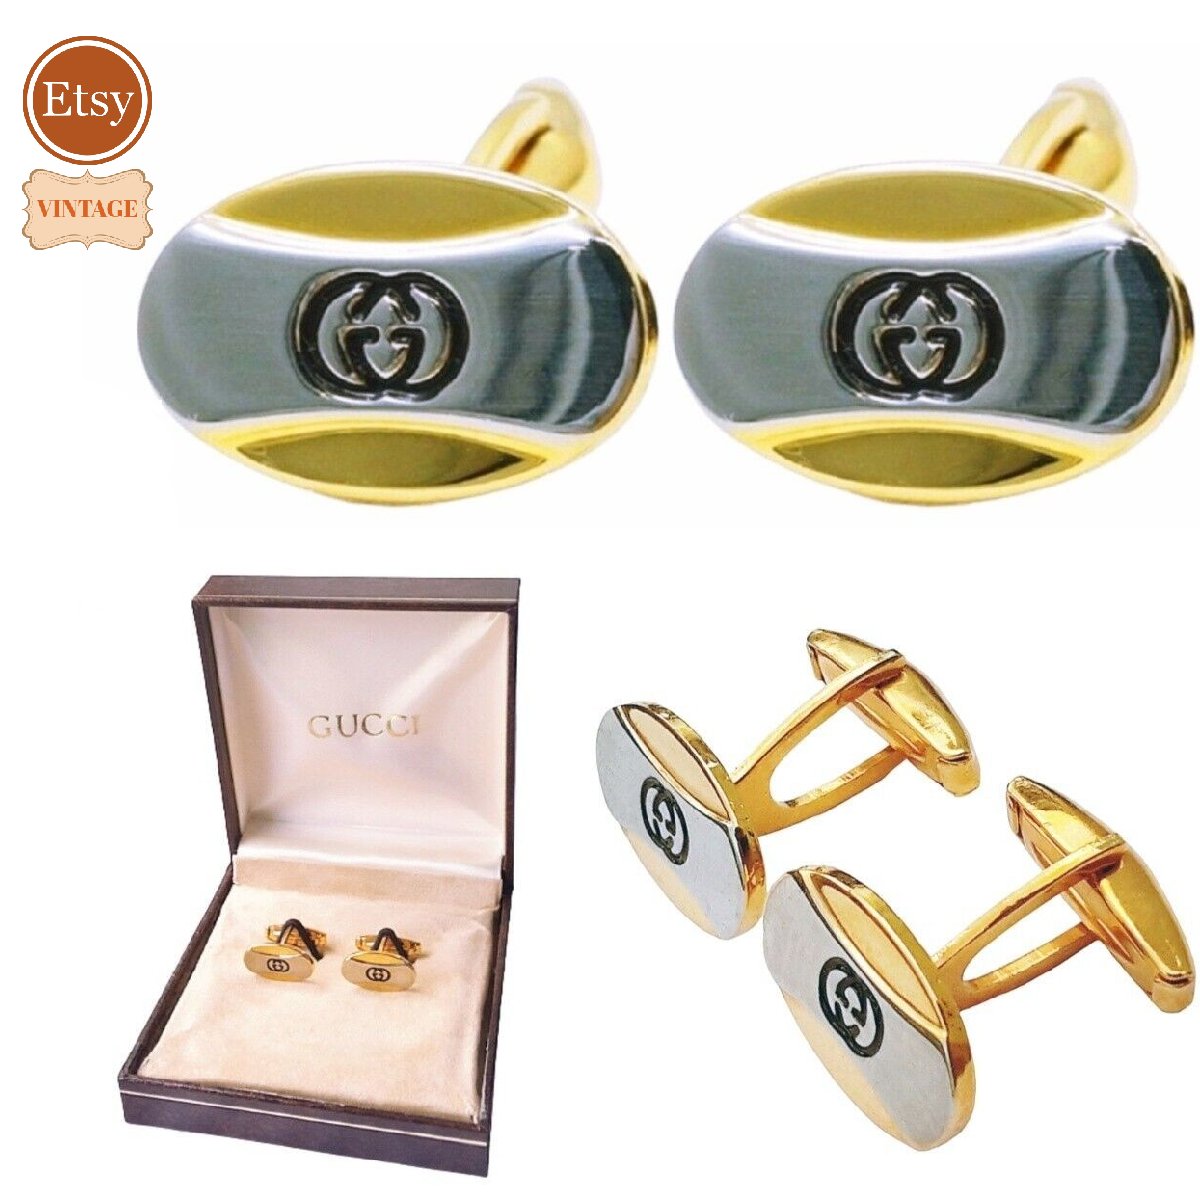 #Gucci #Cufflinks - NEW 80s #vintage - Gold/Silver Highly Polished - GG-Motif - Oval Design - Hallmarked - #Mensfashion Cuff Links #giftsforhim via #etsy #etsyshop #etsyseller shorturl.at/fAL59